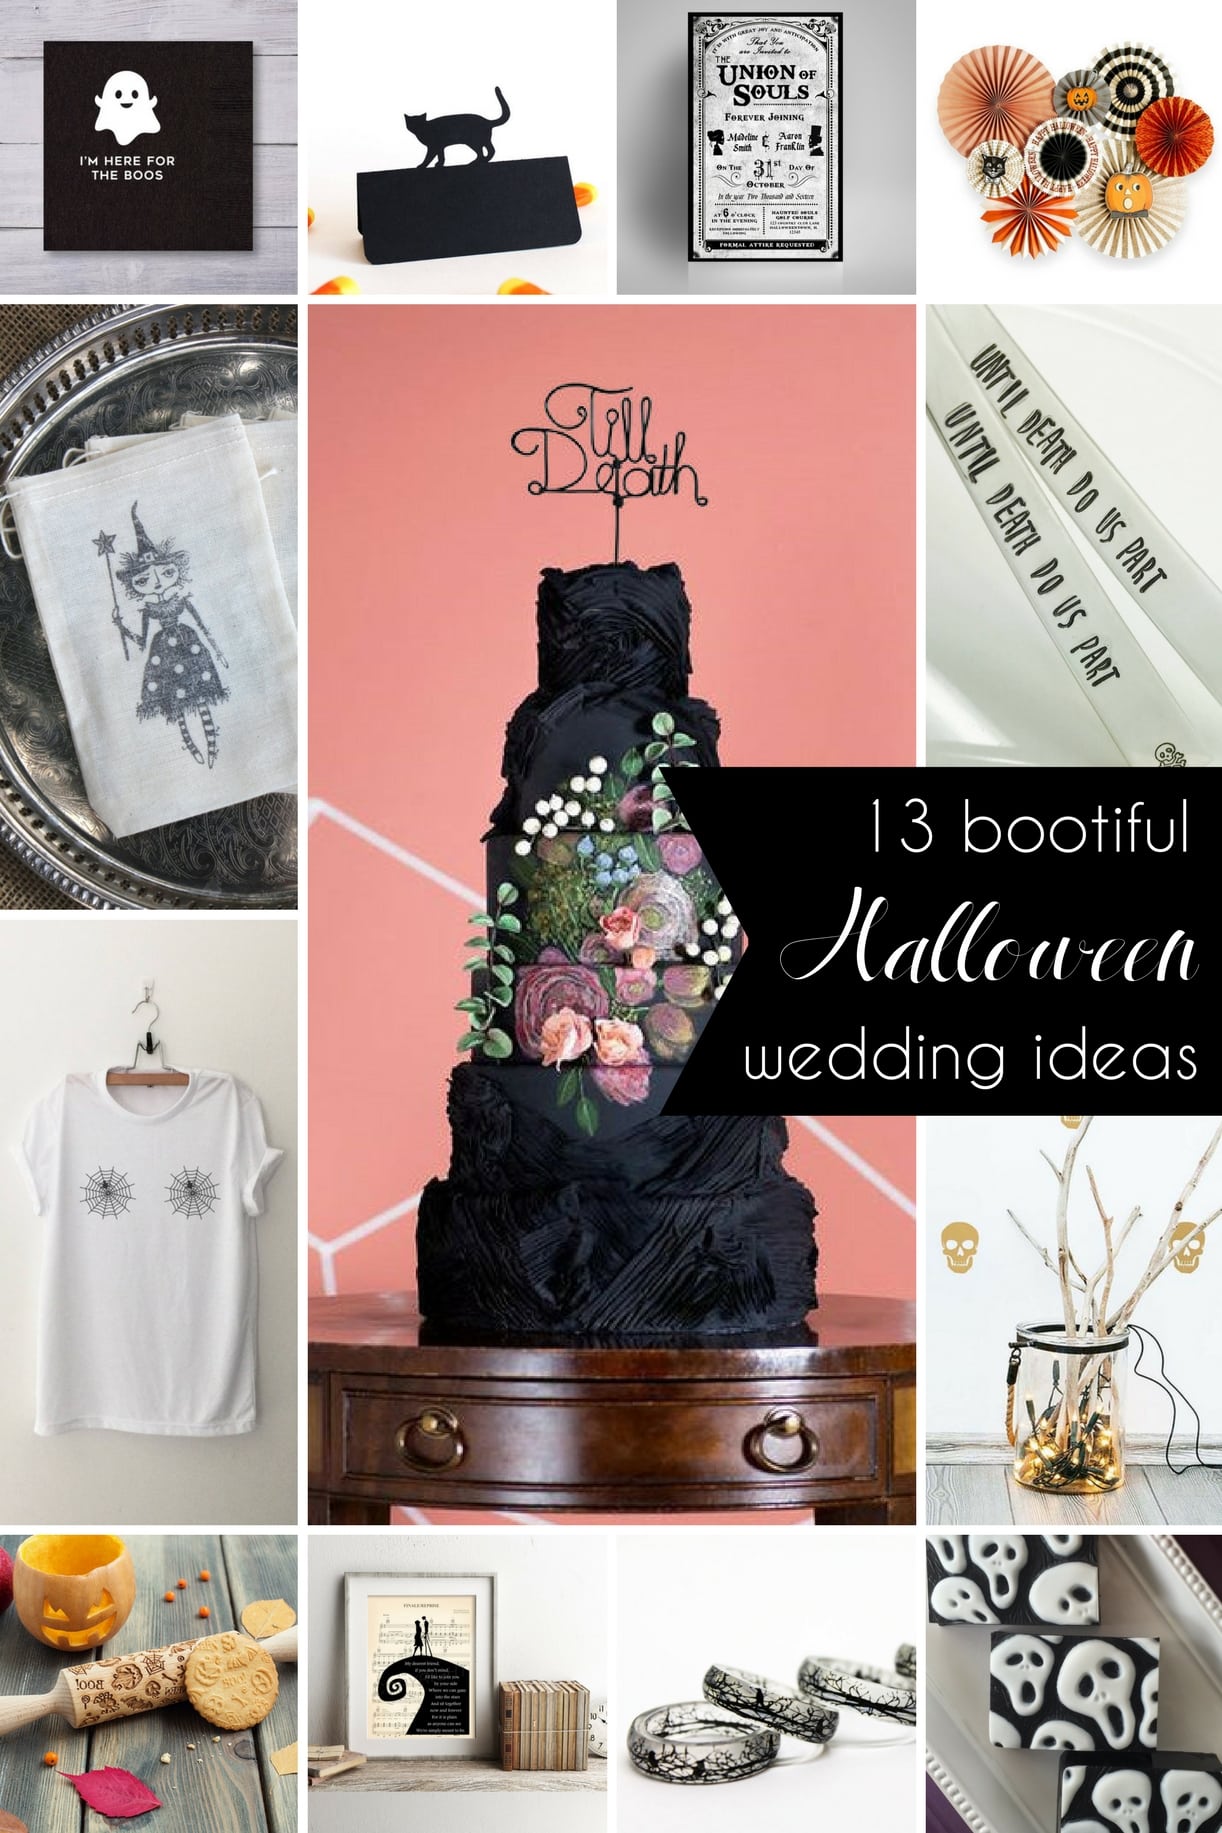 Bootiful Halloween Wedding Ideas as seen on Hill City Bride Virginia Blog and Magazine